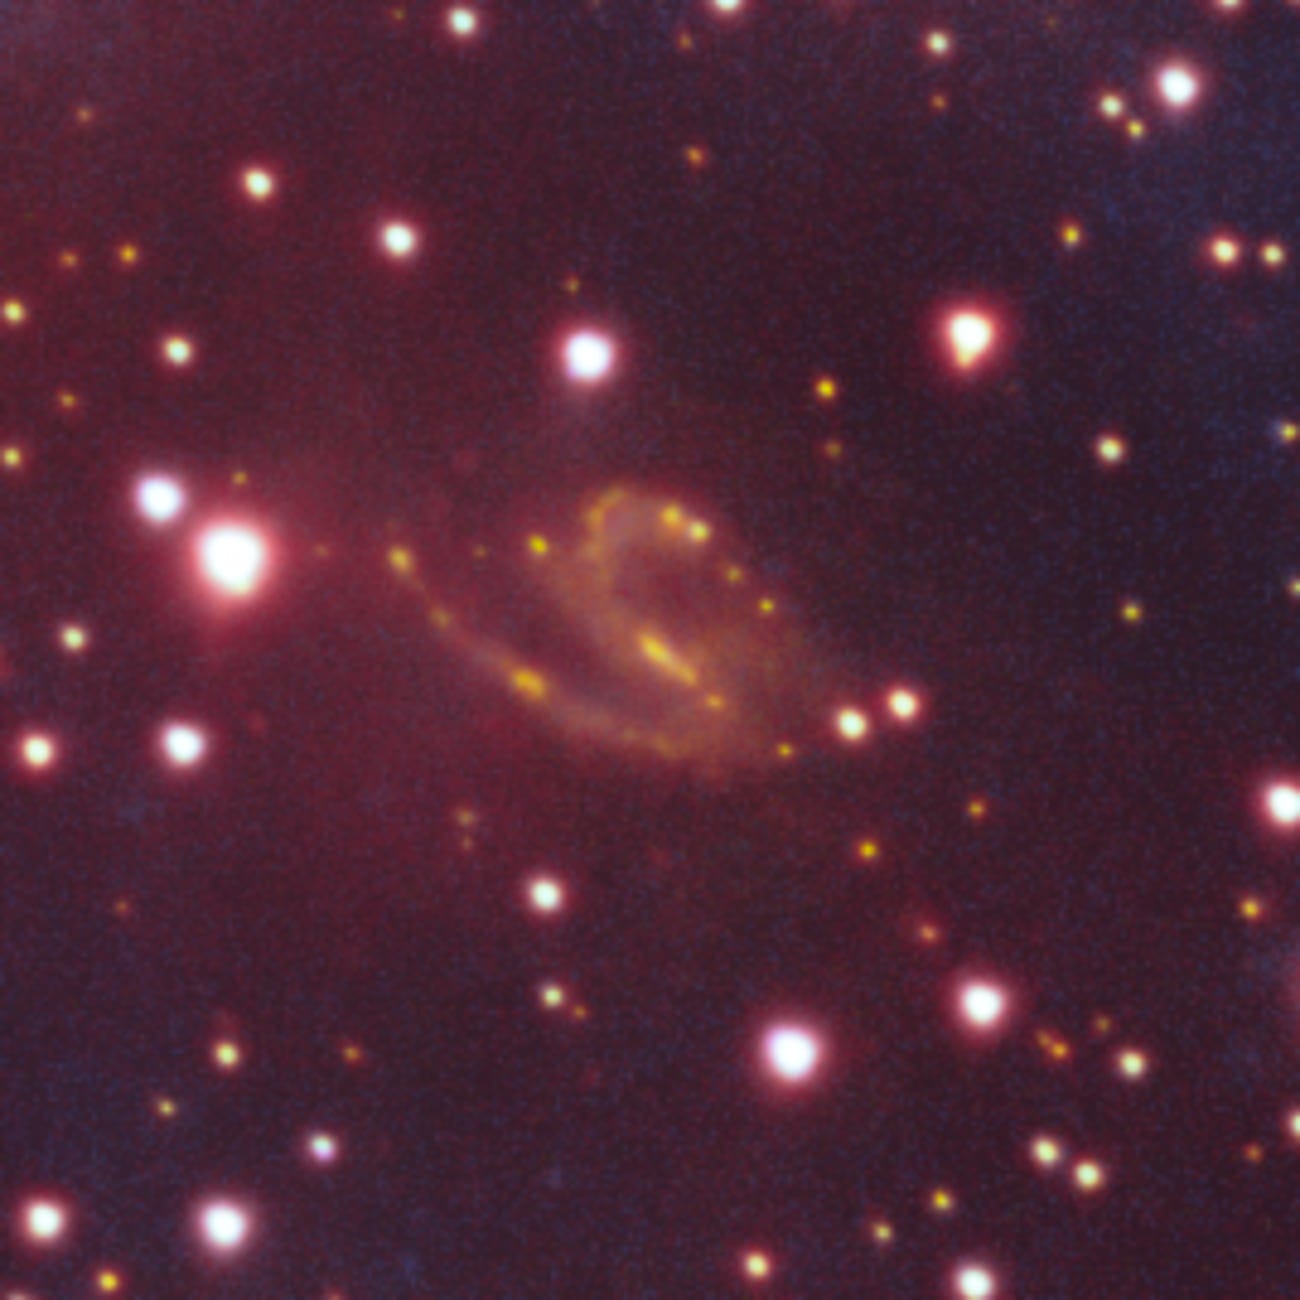 a small swirling galaxy amid stars